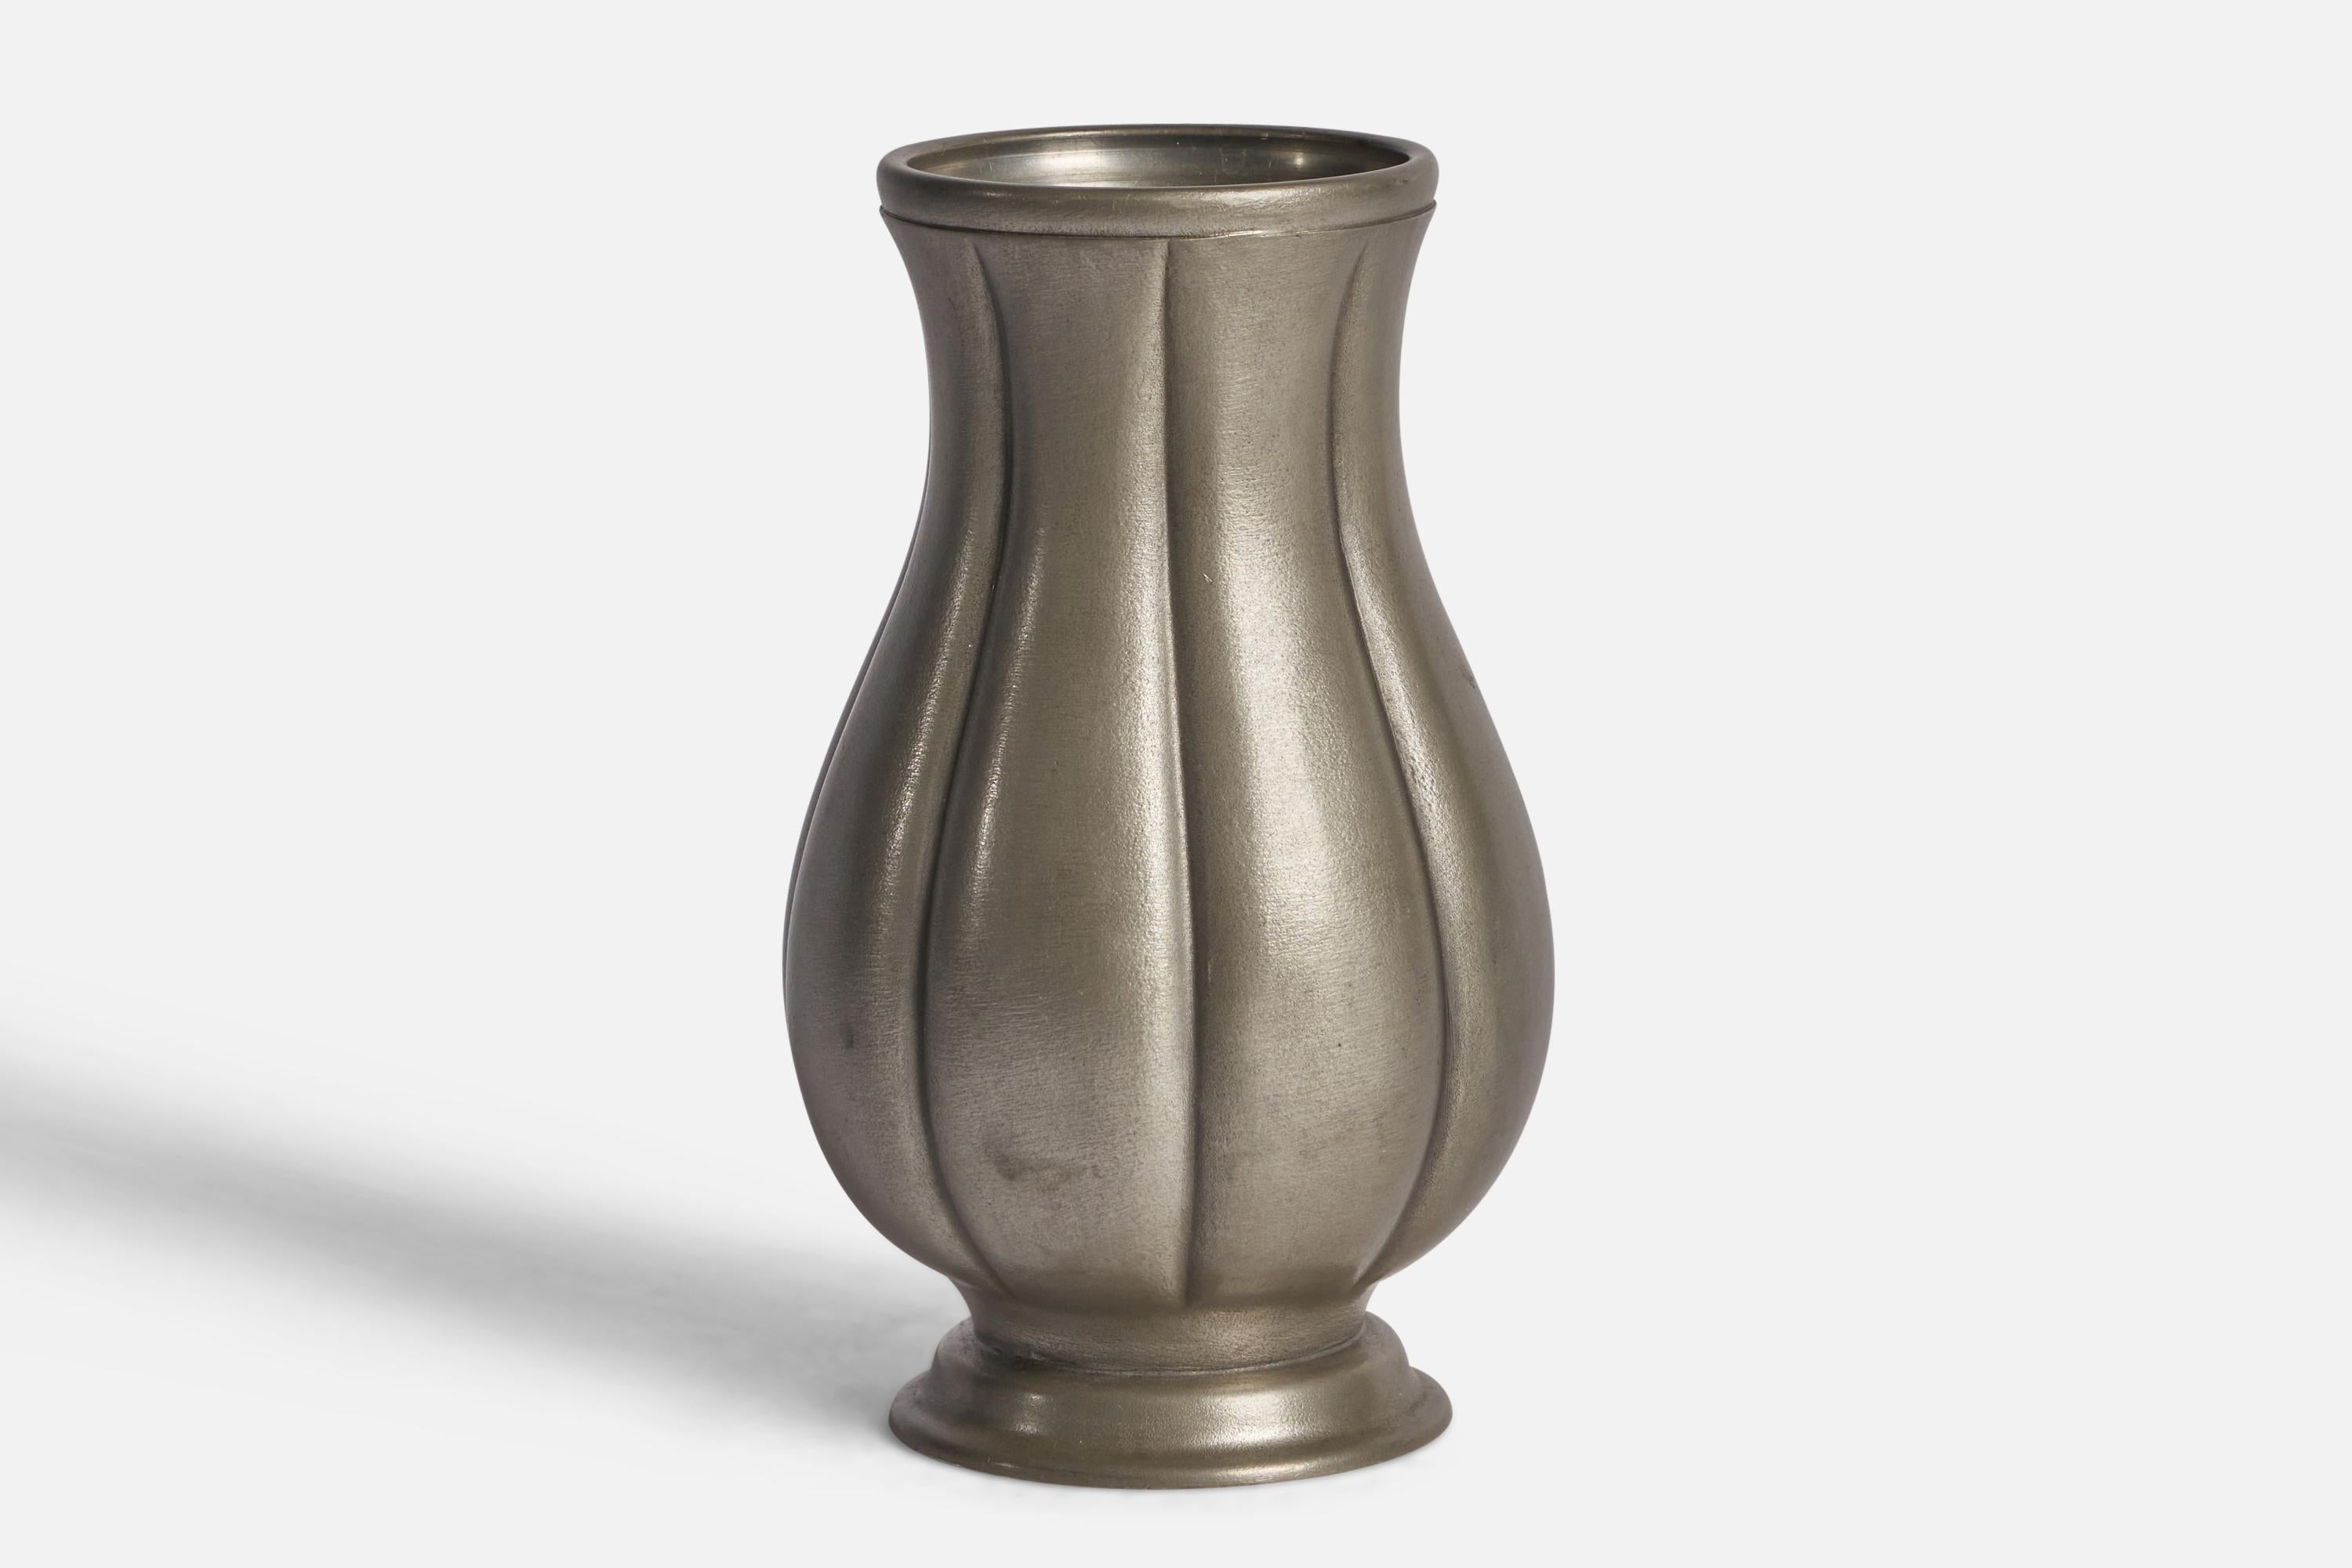 A fluted pewter vase designed by Edvin Ollers and produced by Shreuder & Olson,, Sweden, 1952.

“GJUTET TENN” stamp on bottom